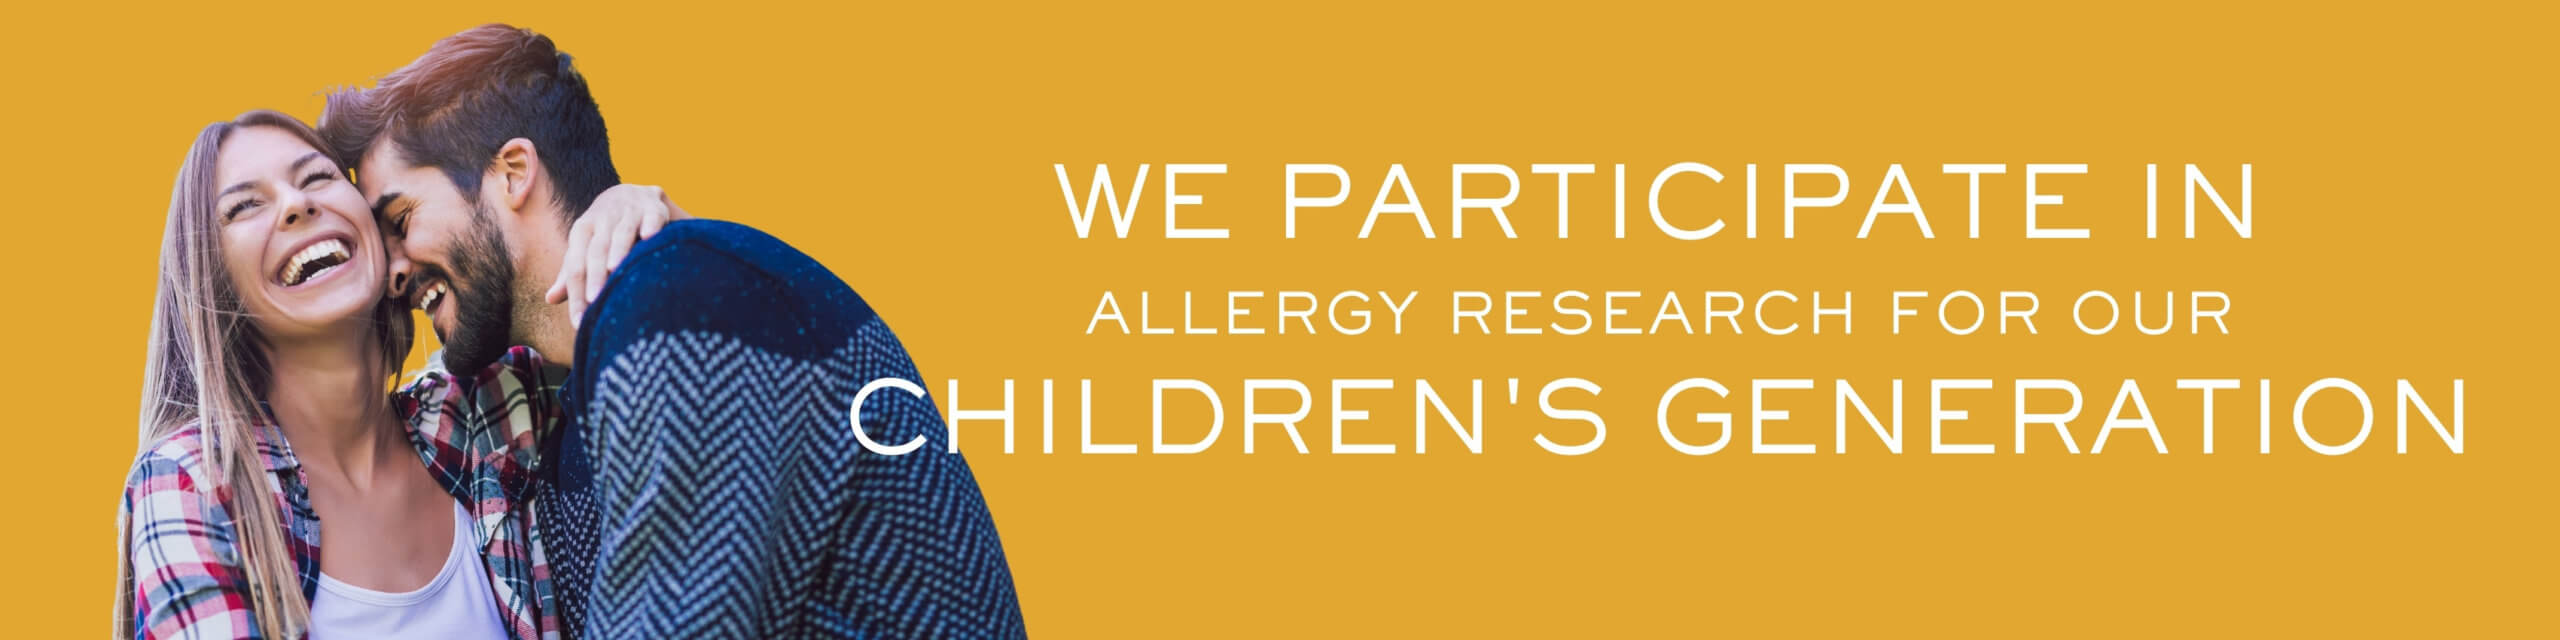 Participate in allergy research